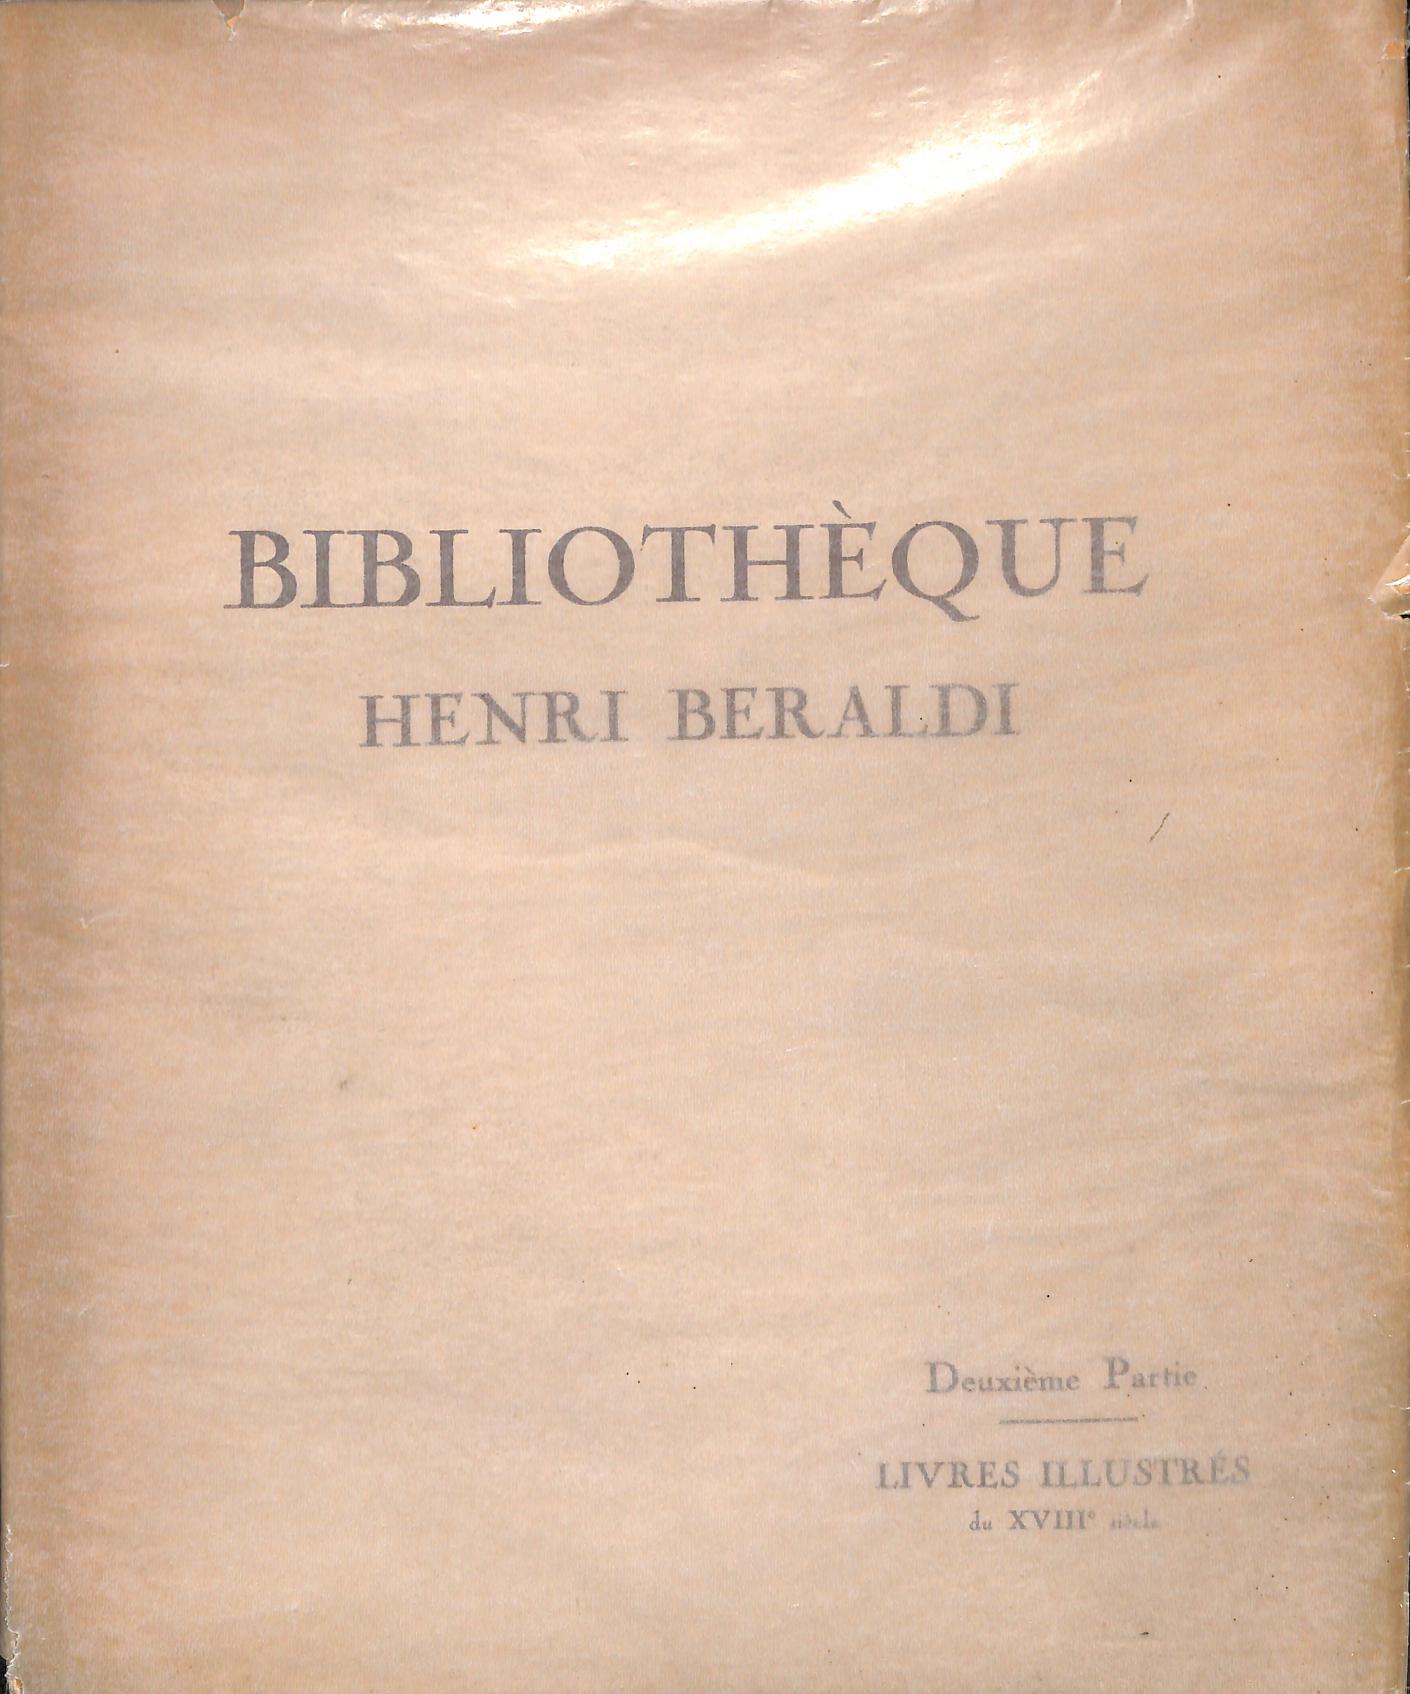 Bibliothèque Henri Beraldi. Catalogues De Ventes. Volume 1 - 5. by ...